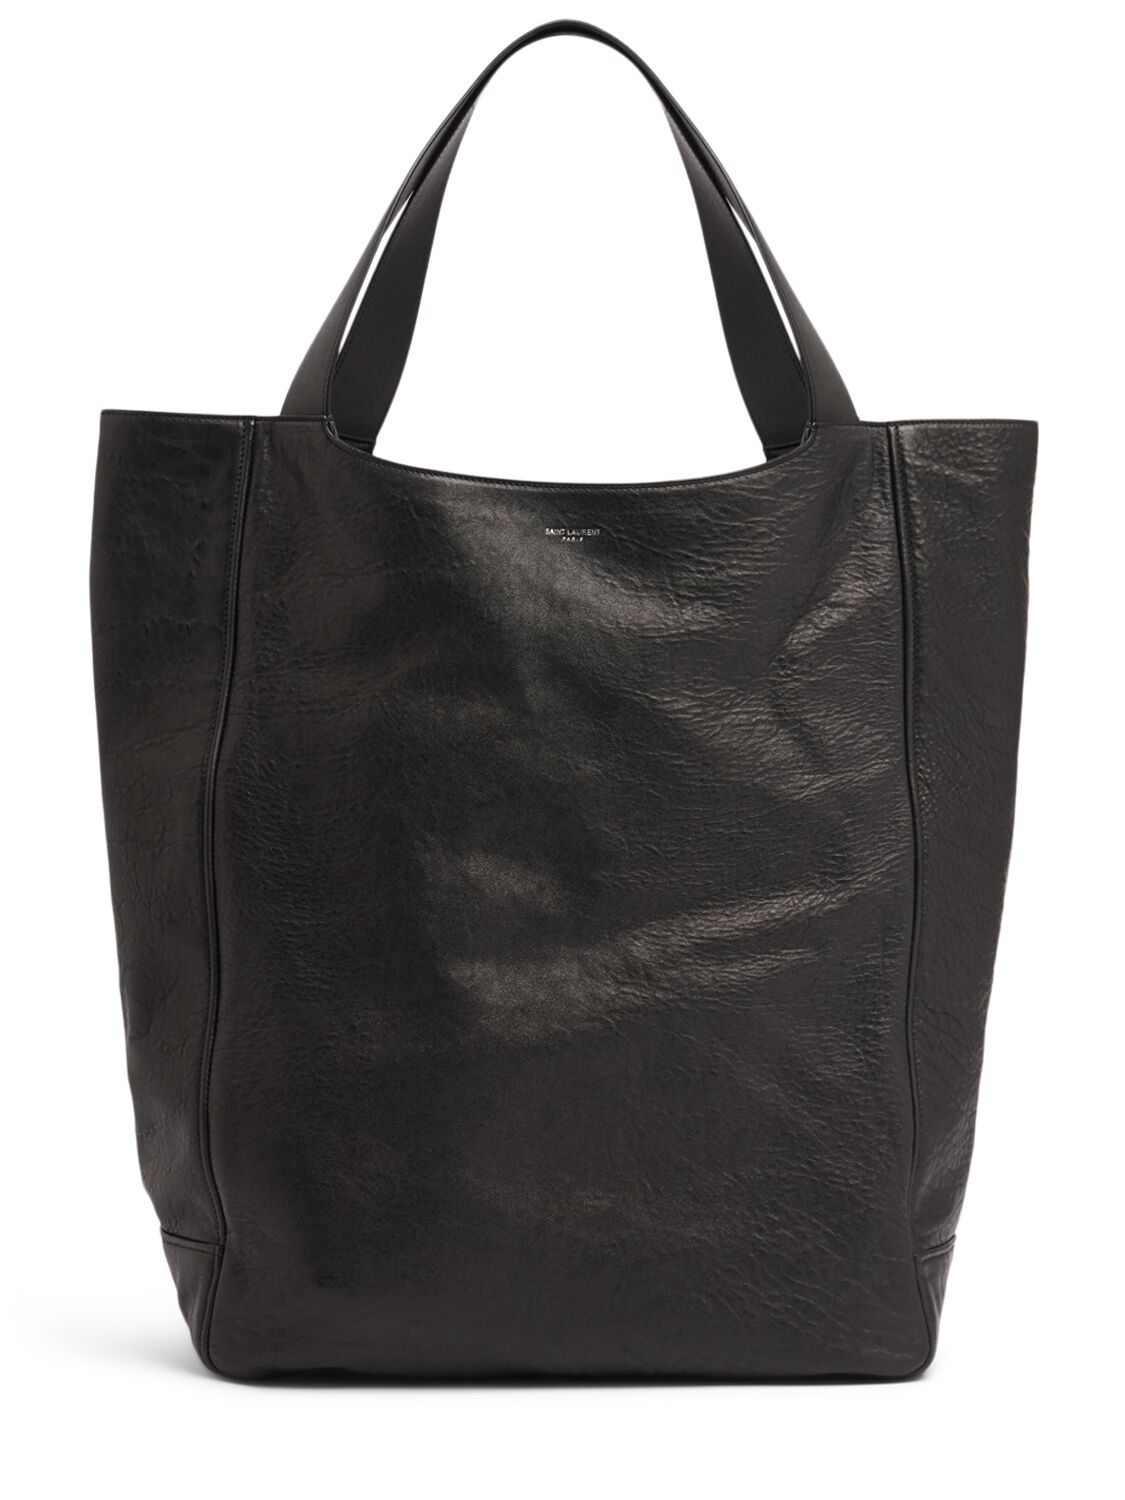 Maxi Saint Laurent Leather Tote Bag